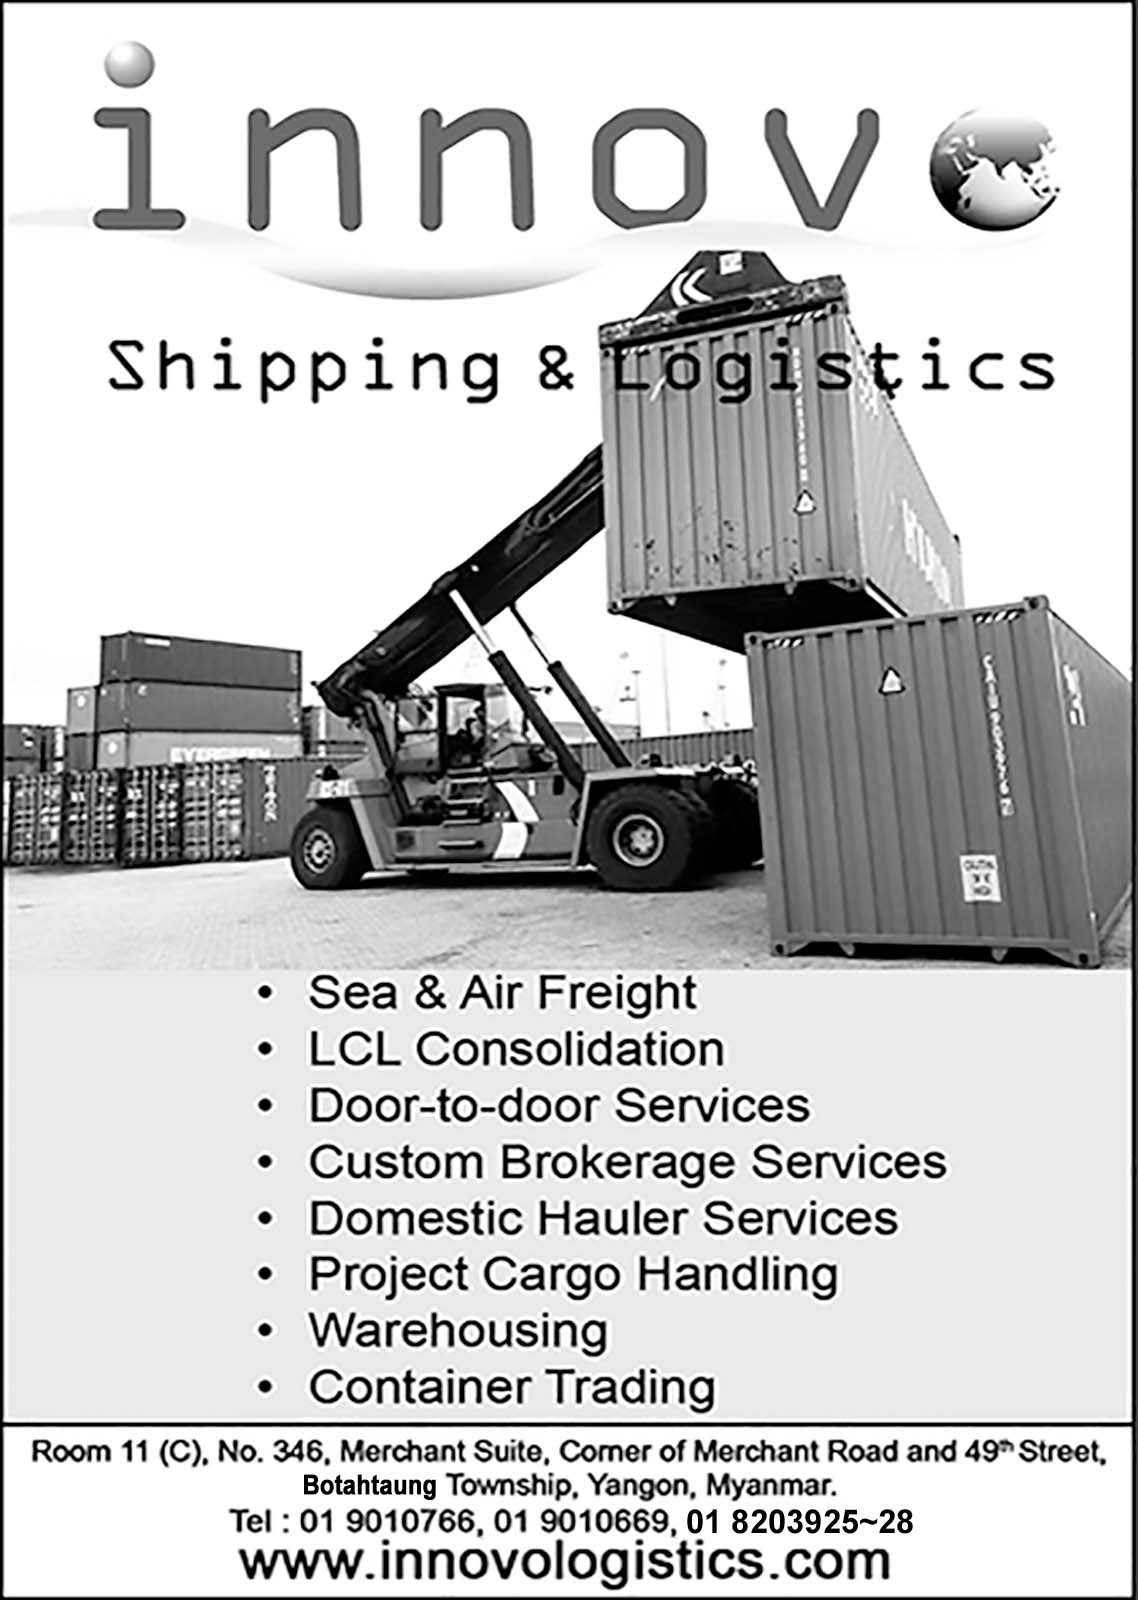 Innovo Shipping & Logistics